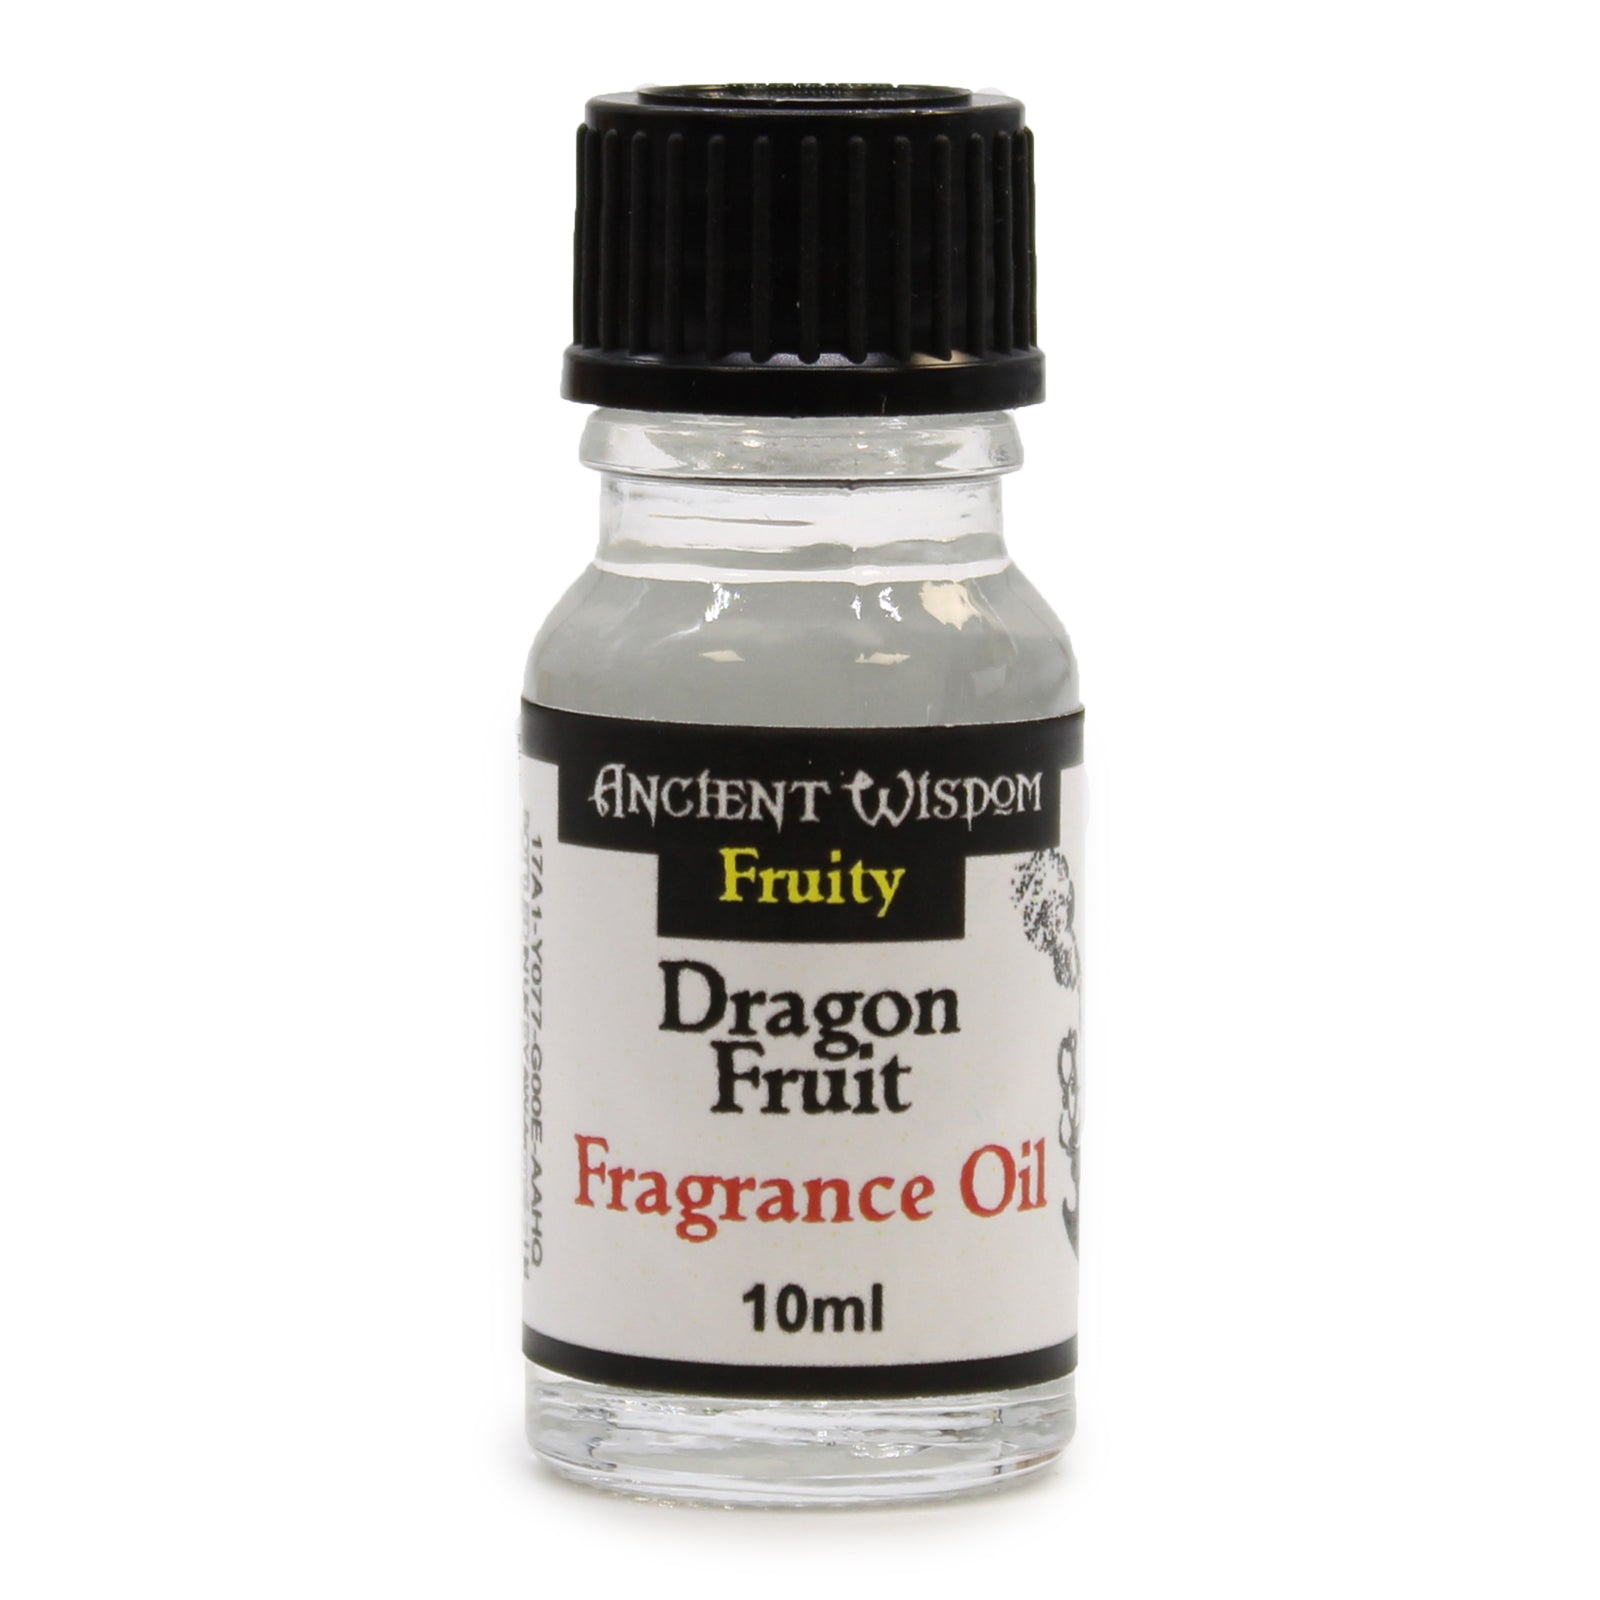 View Dragon Fruit Fragrance Oil 10ml information